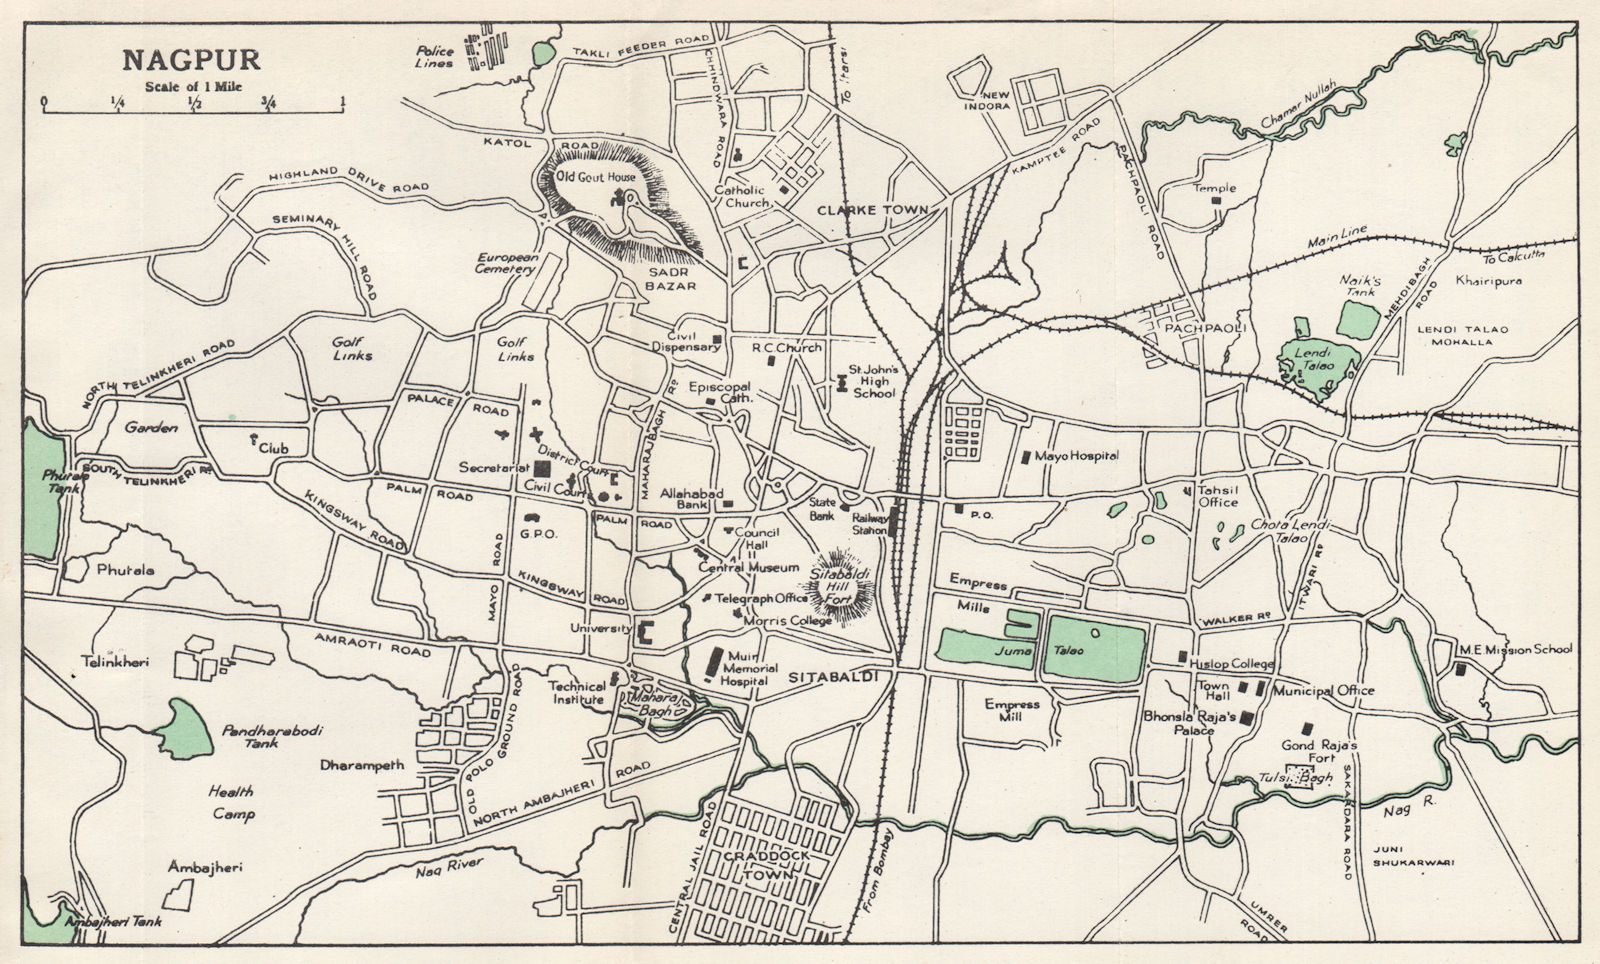 NAGPUR. city plan showing key buildings. Maharashtra. India. 1965 old map